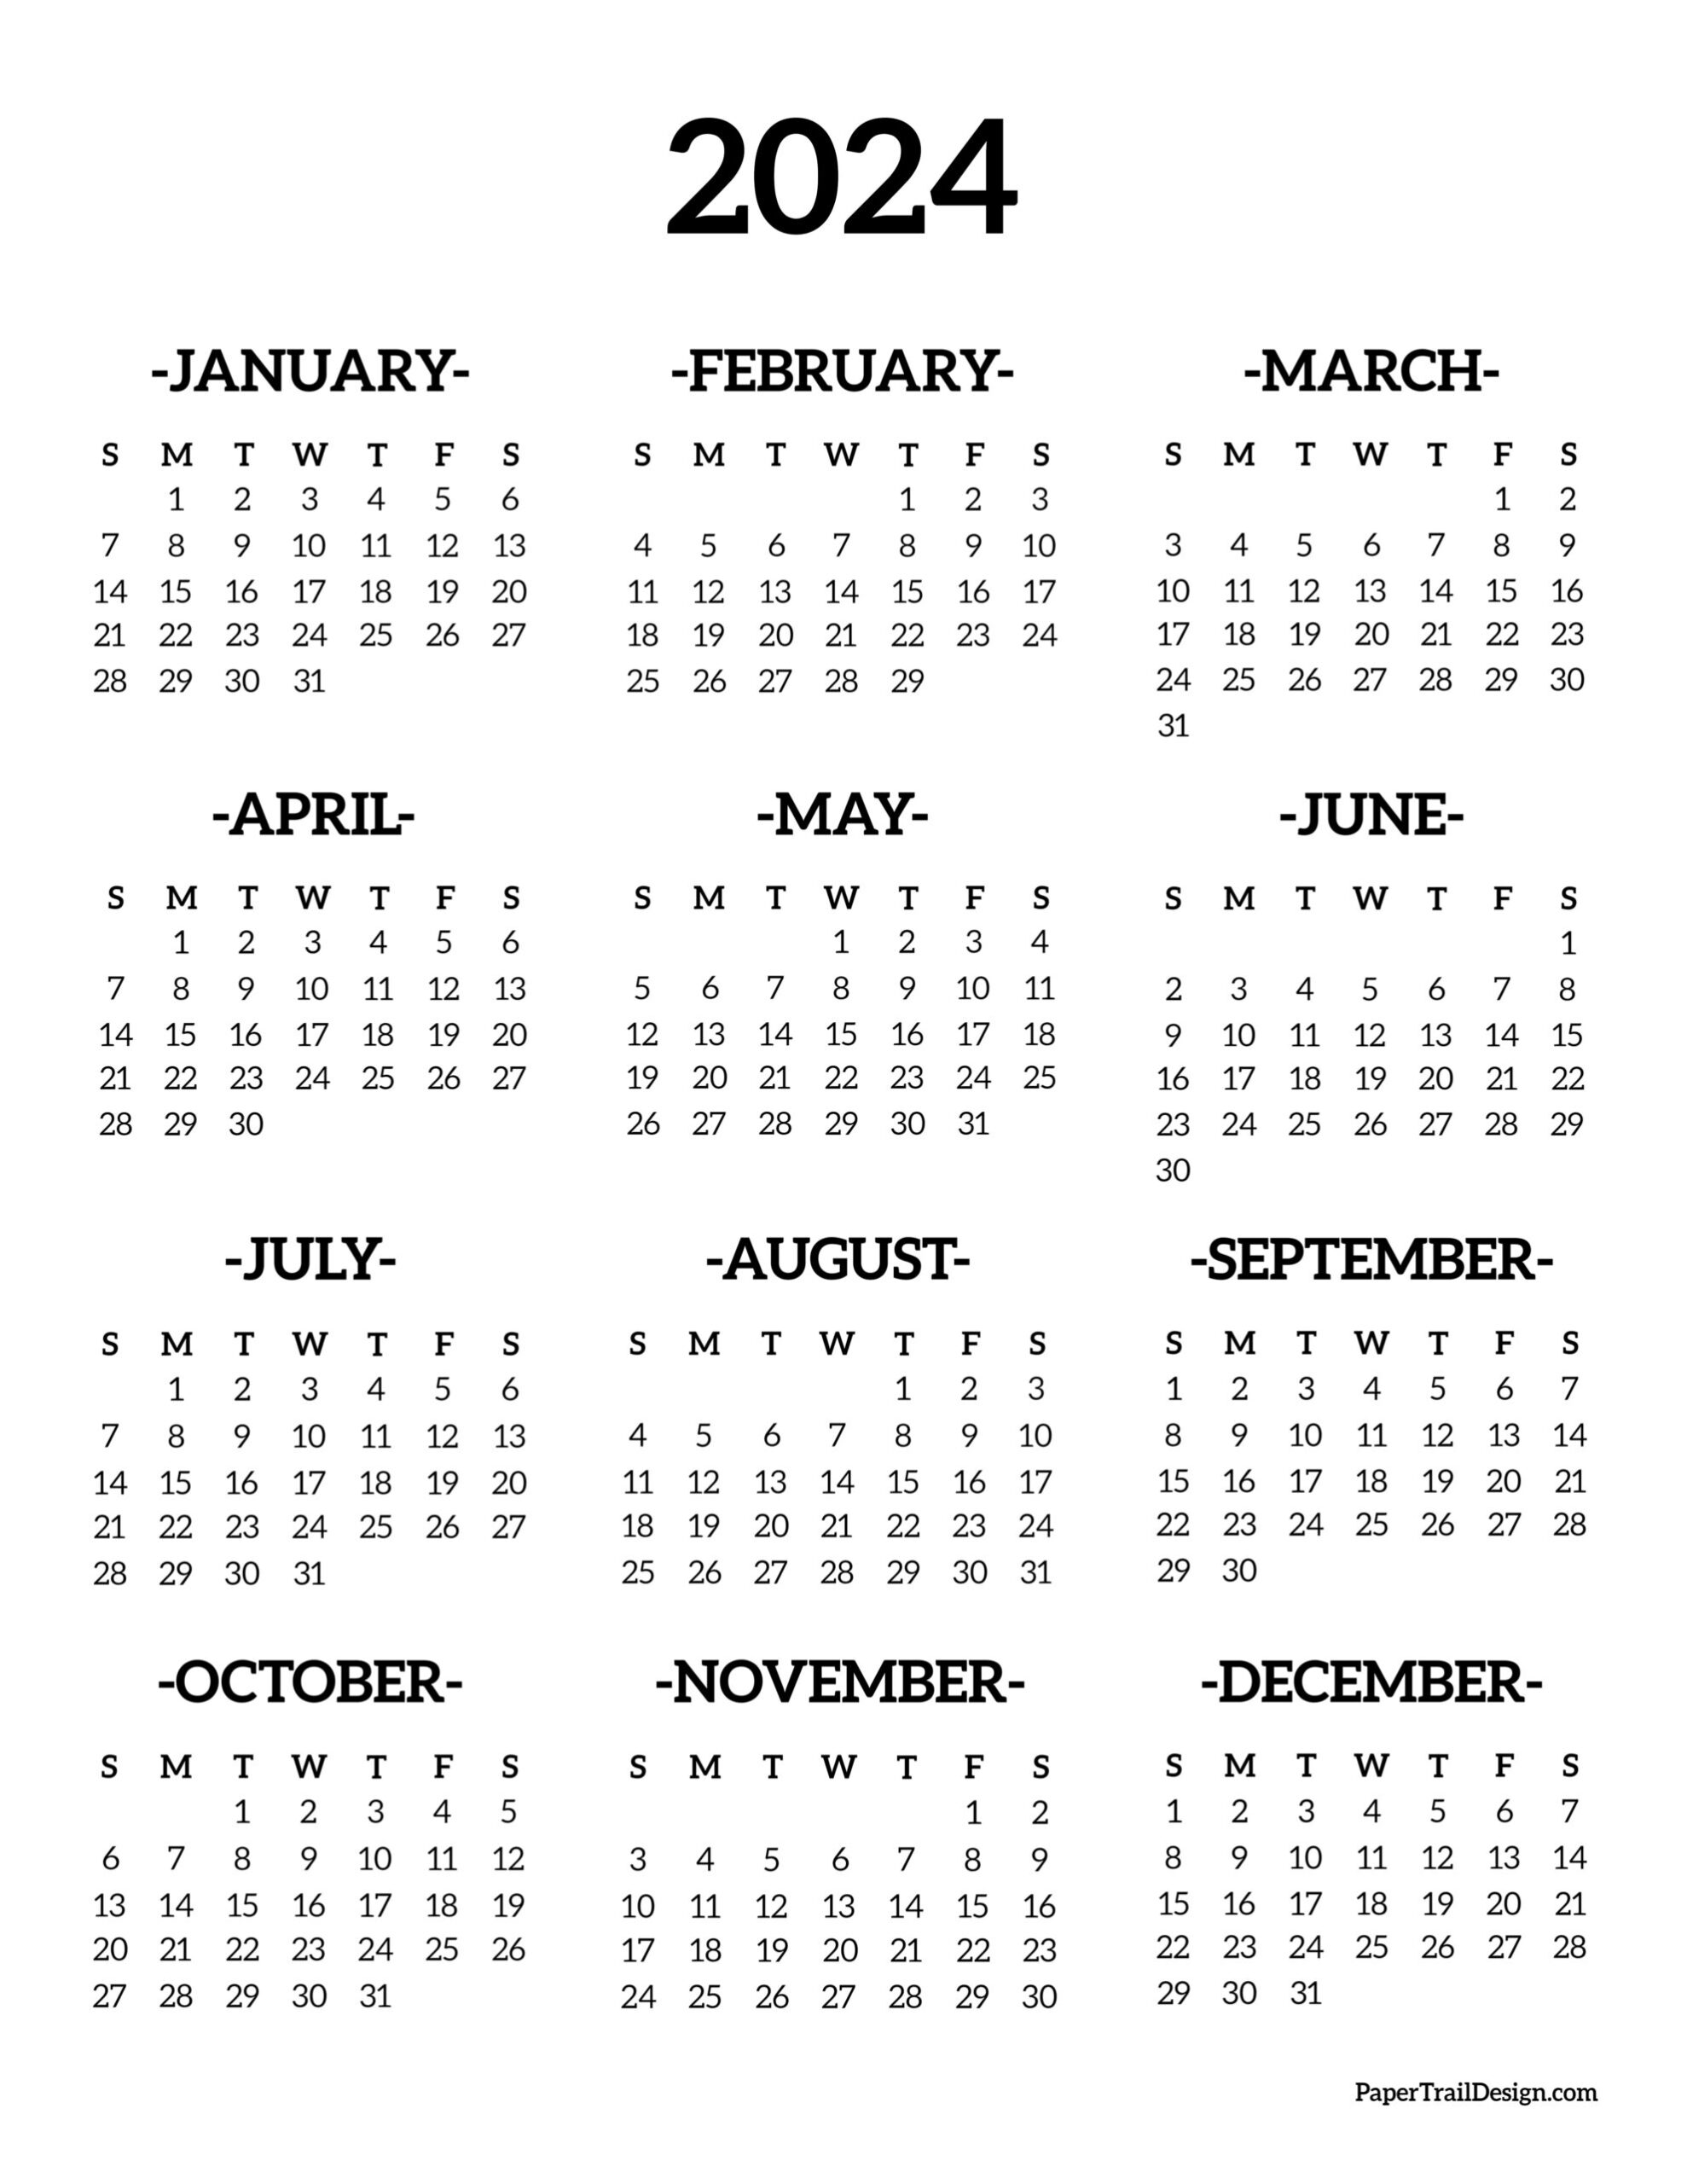 Calendar 2024 Printable One Page - Paper Trail Design for 2024 Annual Printable Calendar